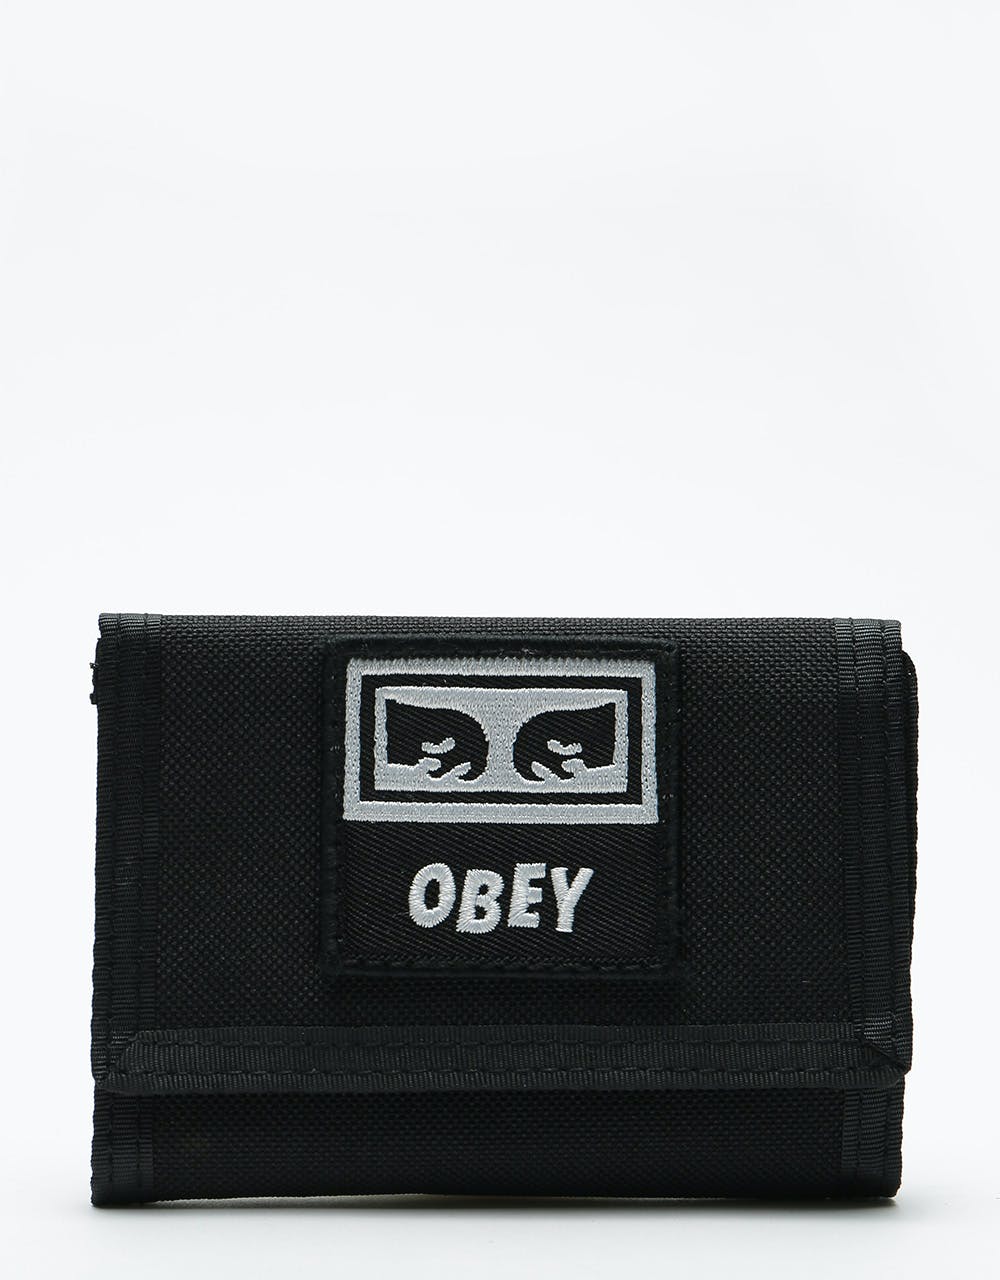 Obey Takeover Tri Fold Wallet - Black